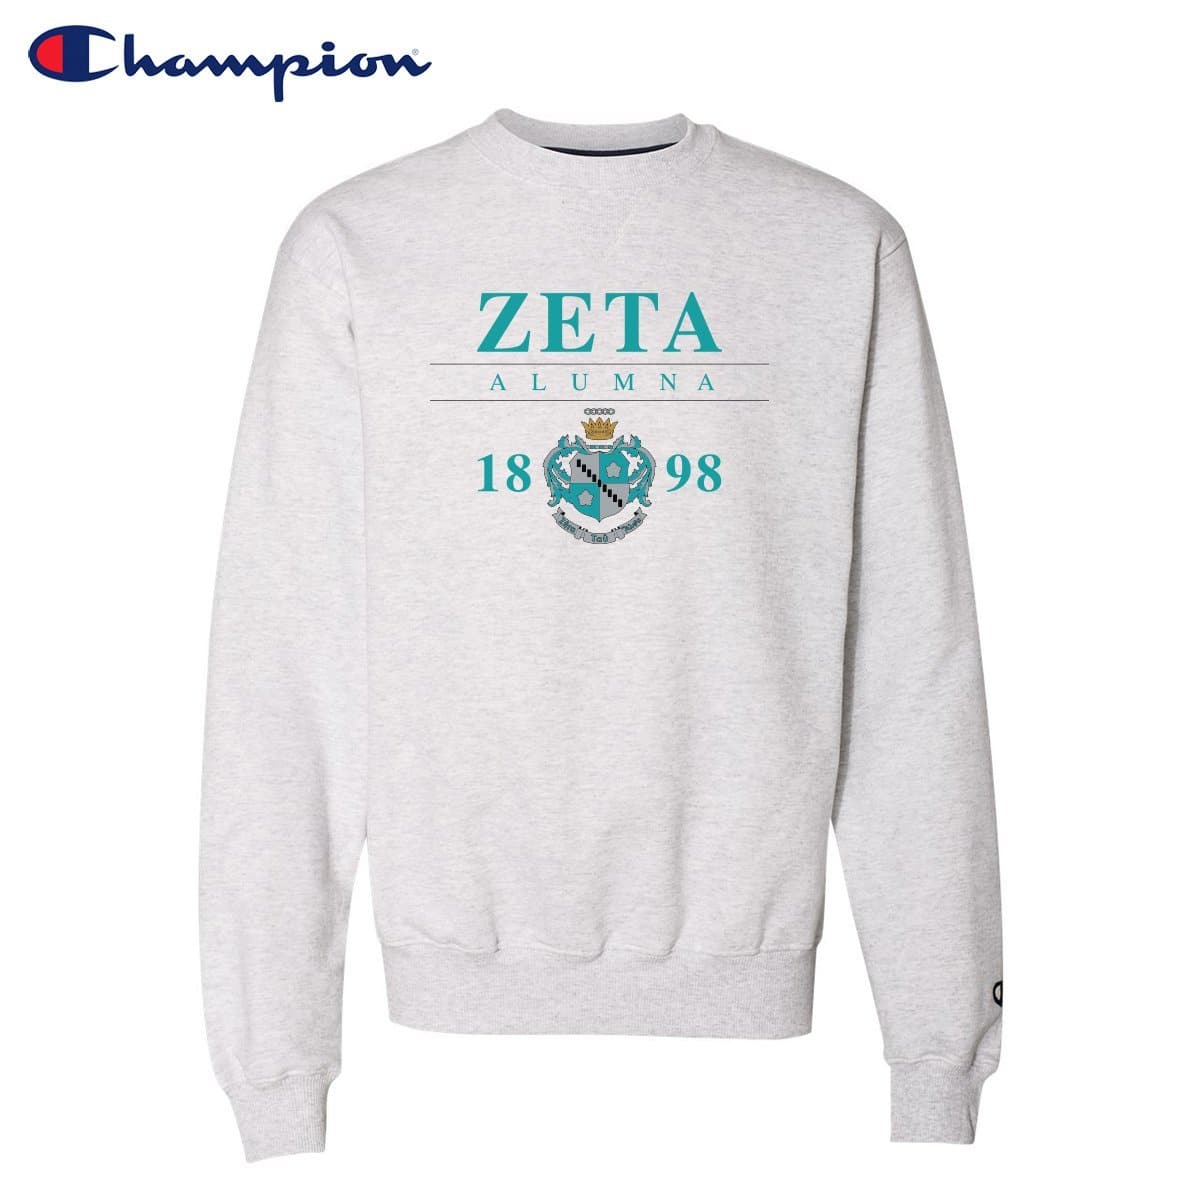 Zeta Alumni Champion Sweatshirt | Zeta Tau Alpha | Sweatshirts > Crewneck sweatshirts